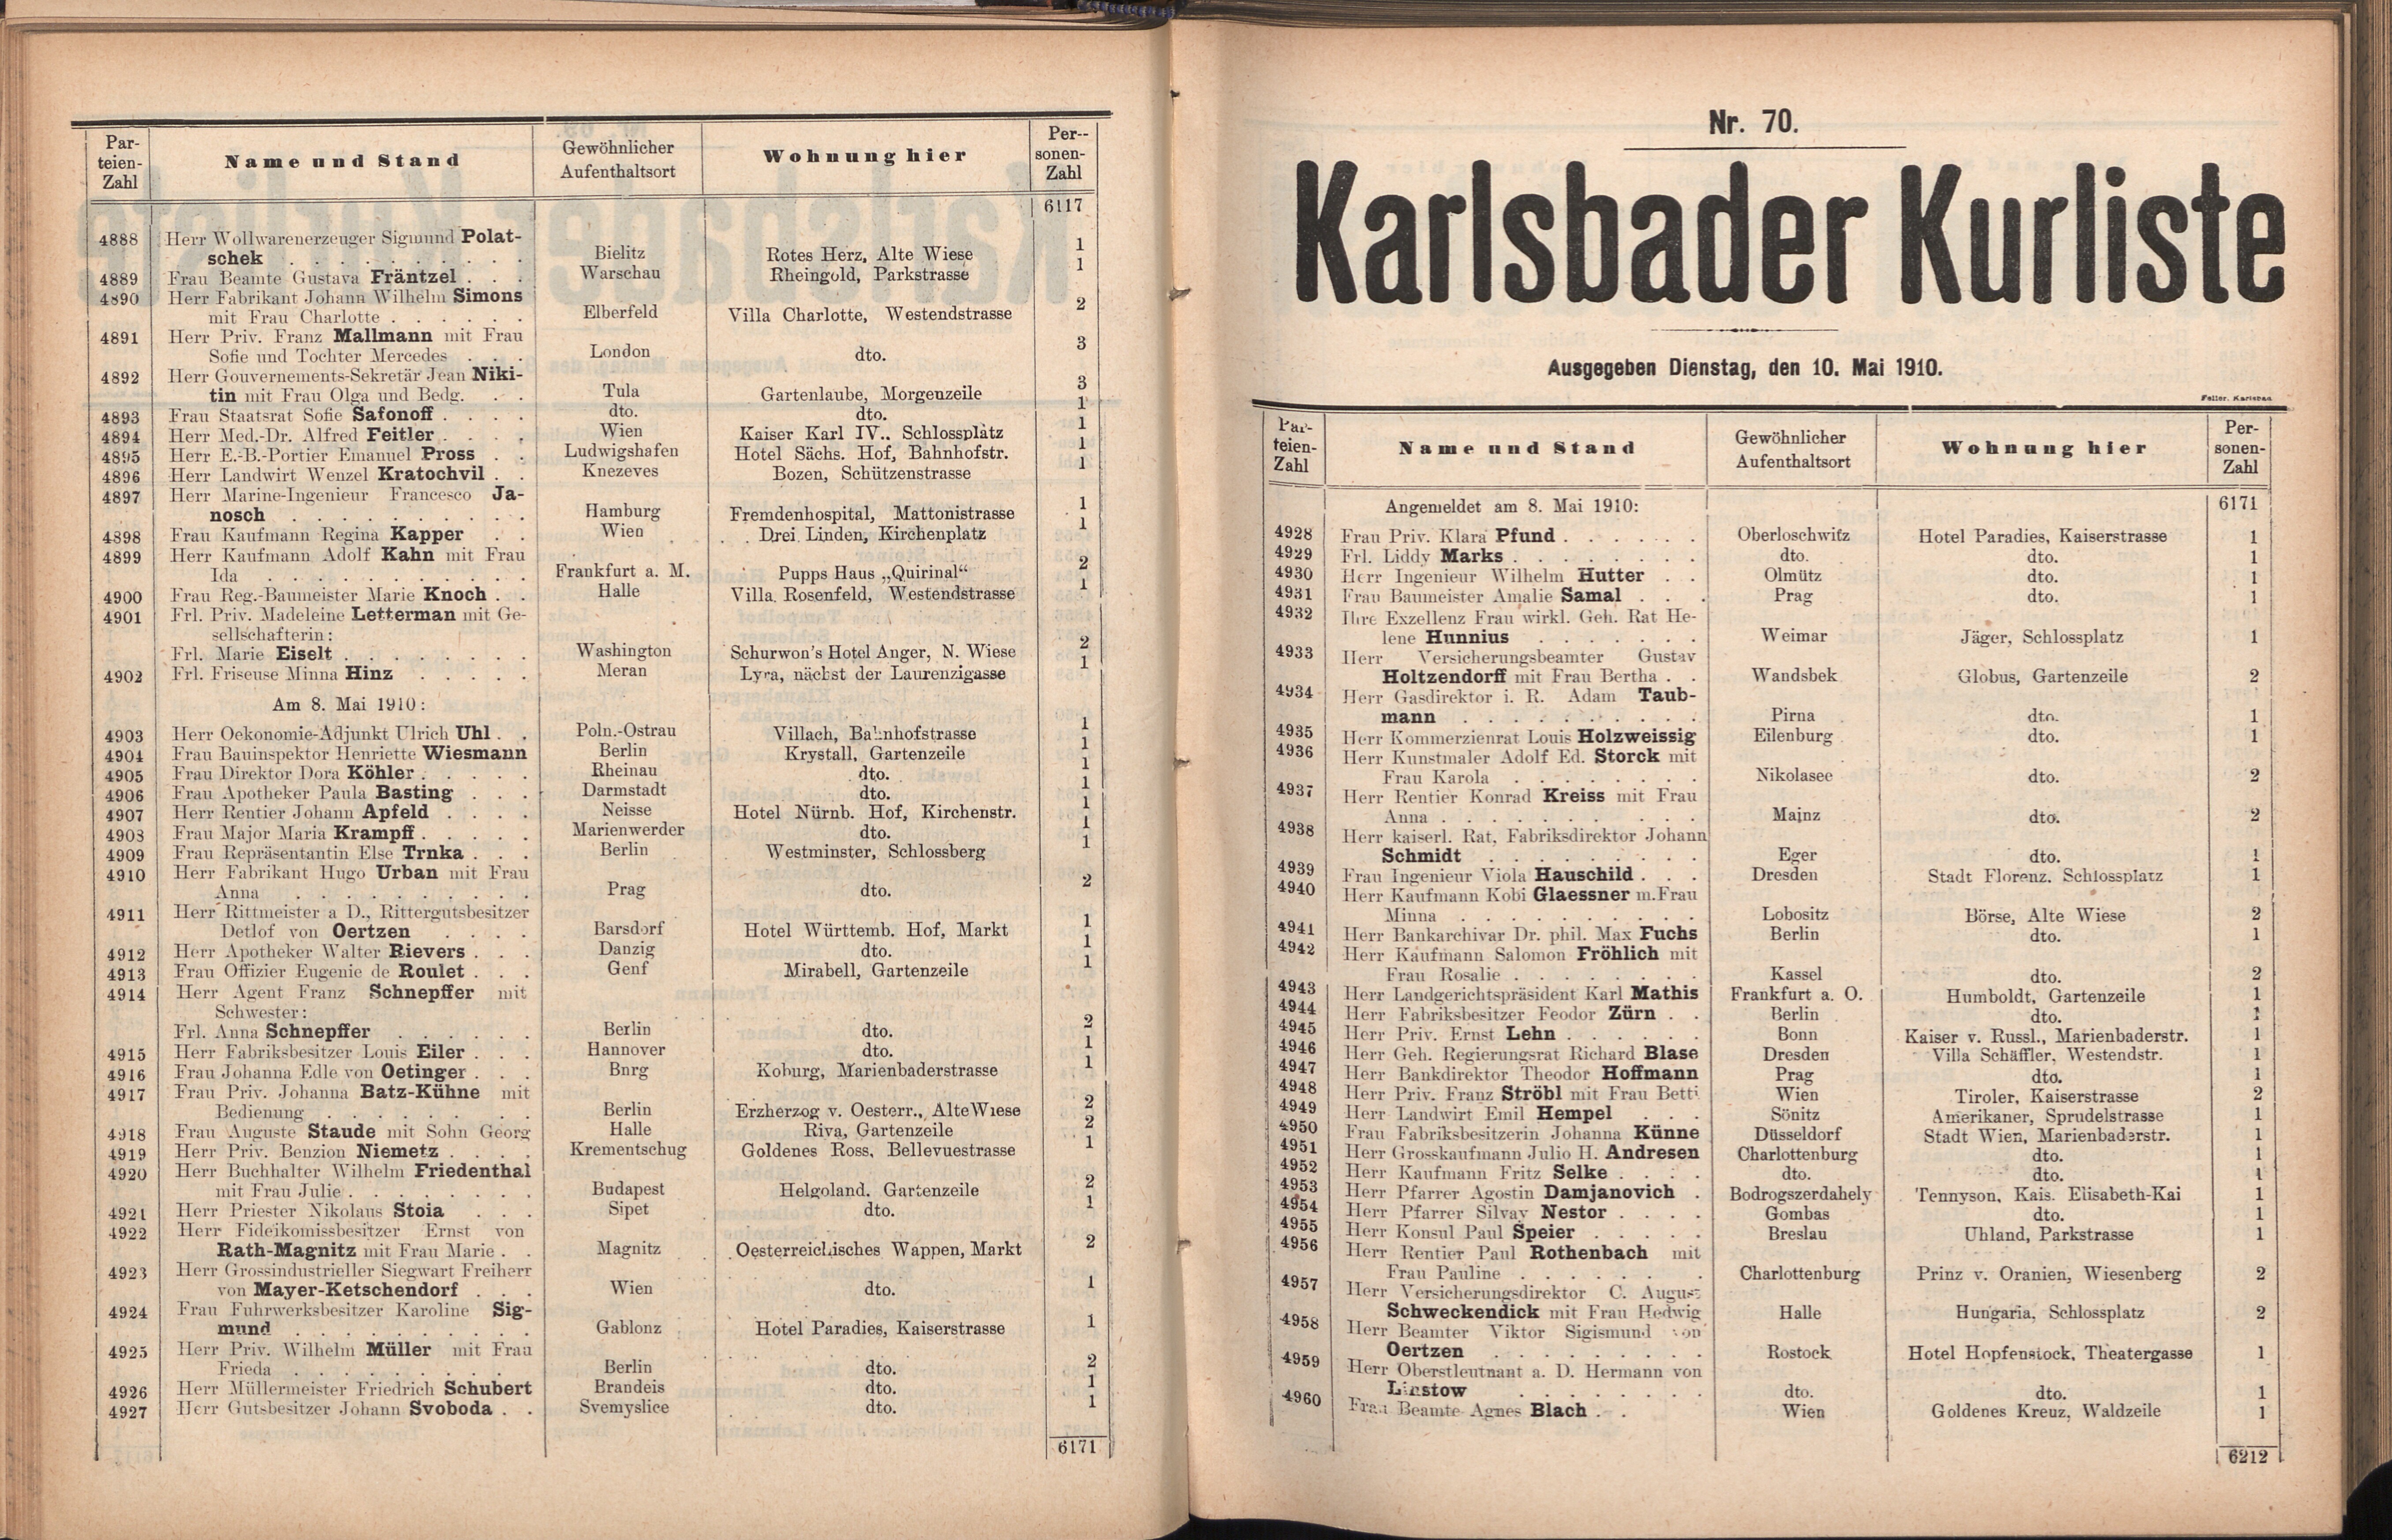 191. soap-kv_knihovna_karlsbader-kurliste-1910_1910